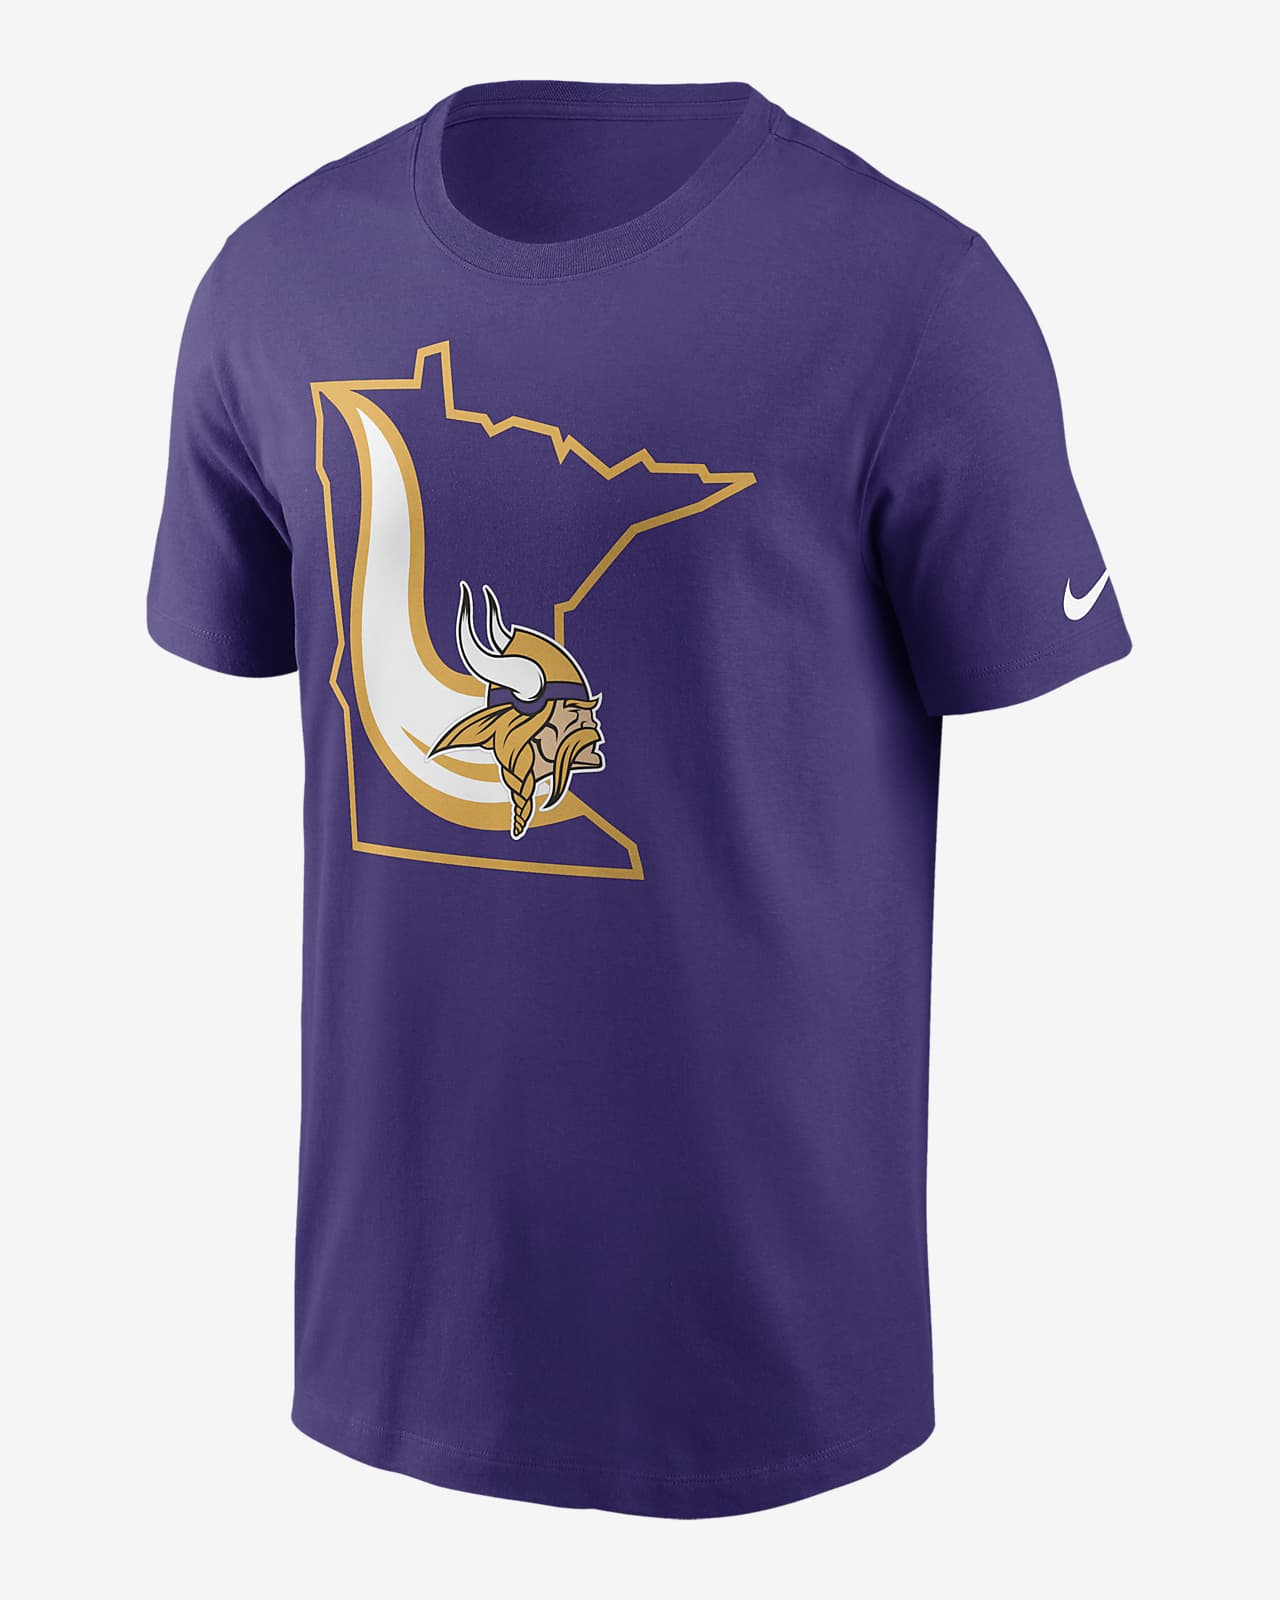 Nike Local Essential (NFL Minnesota Vikings) Men's T-Shirt